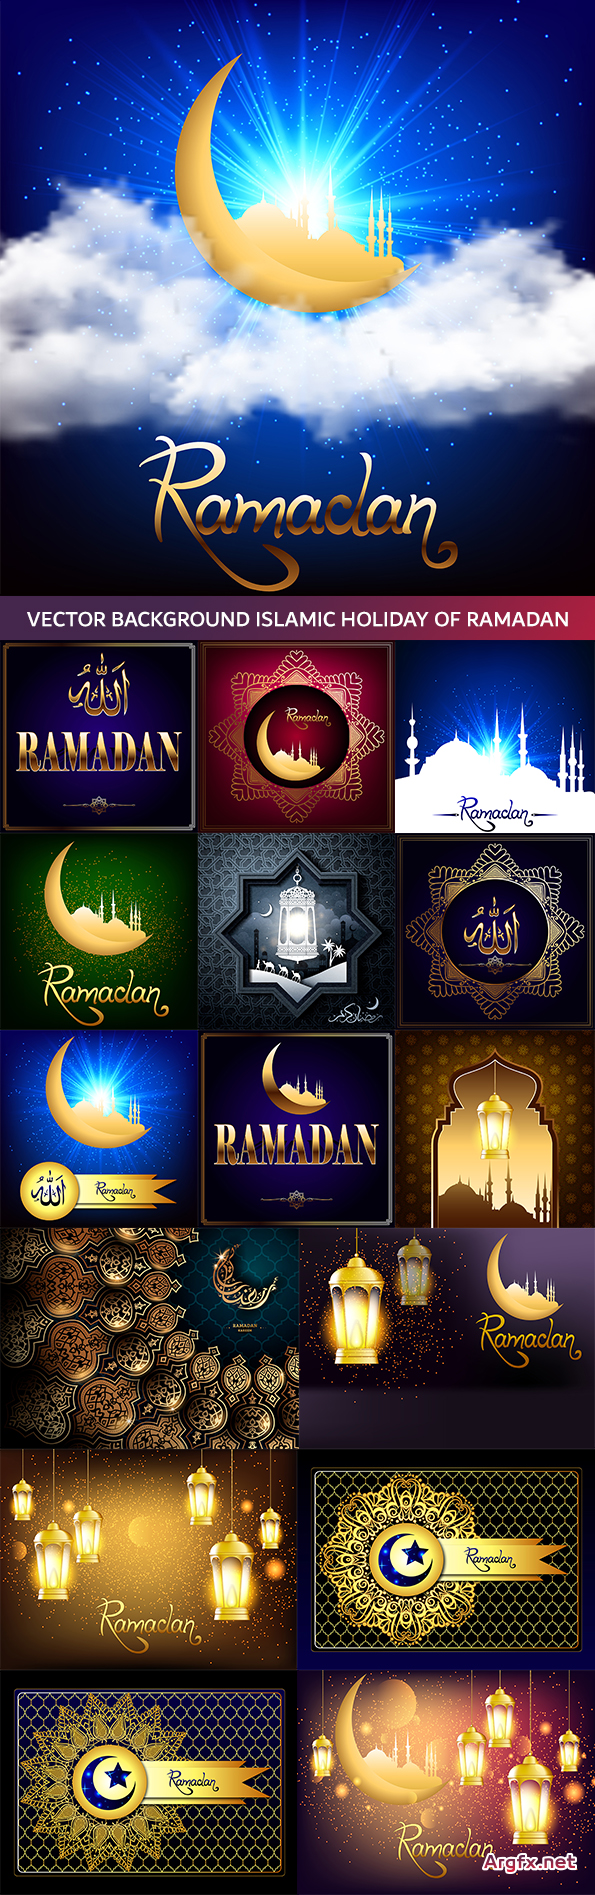 Vector background Islamic holiday of Ramadan